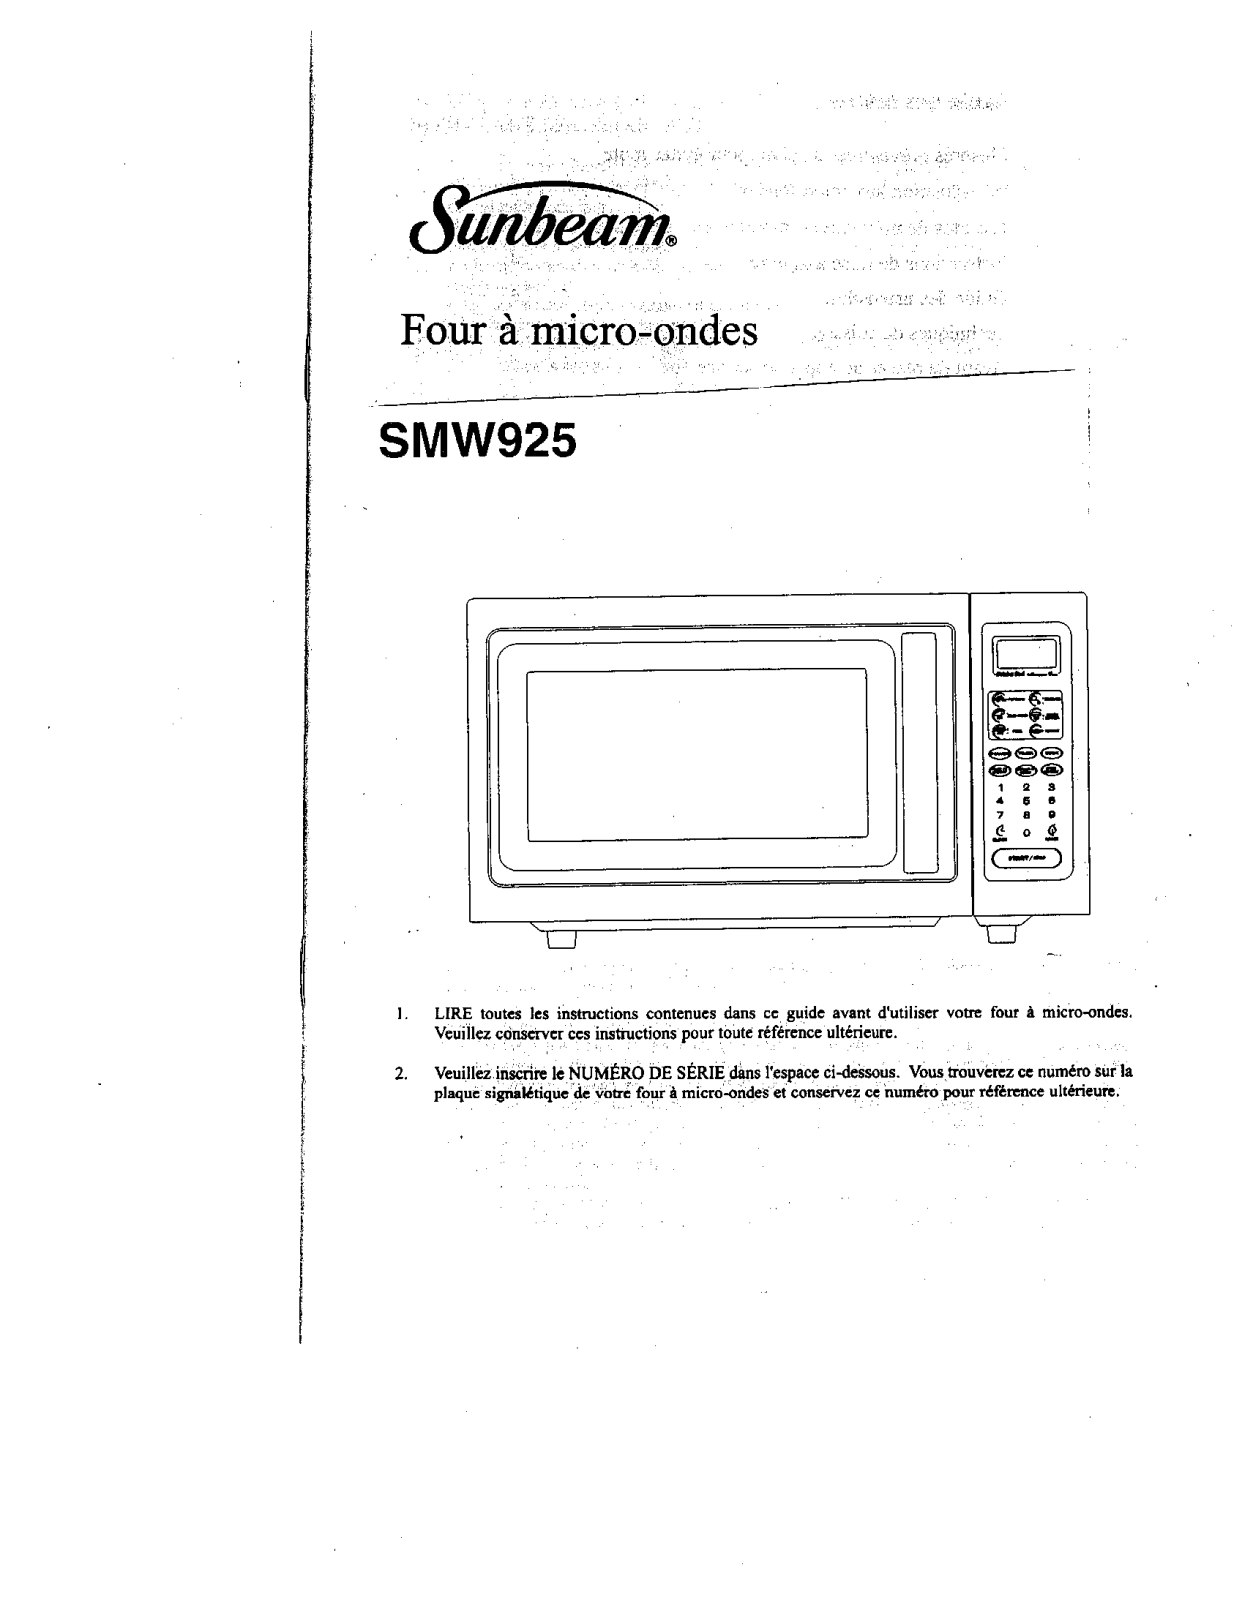 Sunbeam SMW925 Owner's Manual